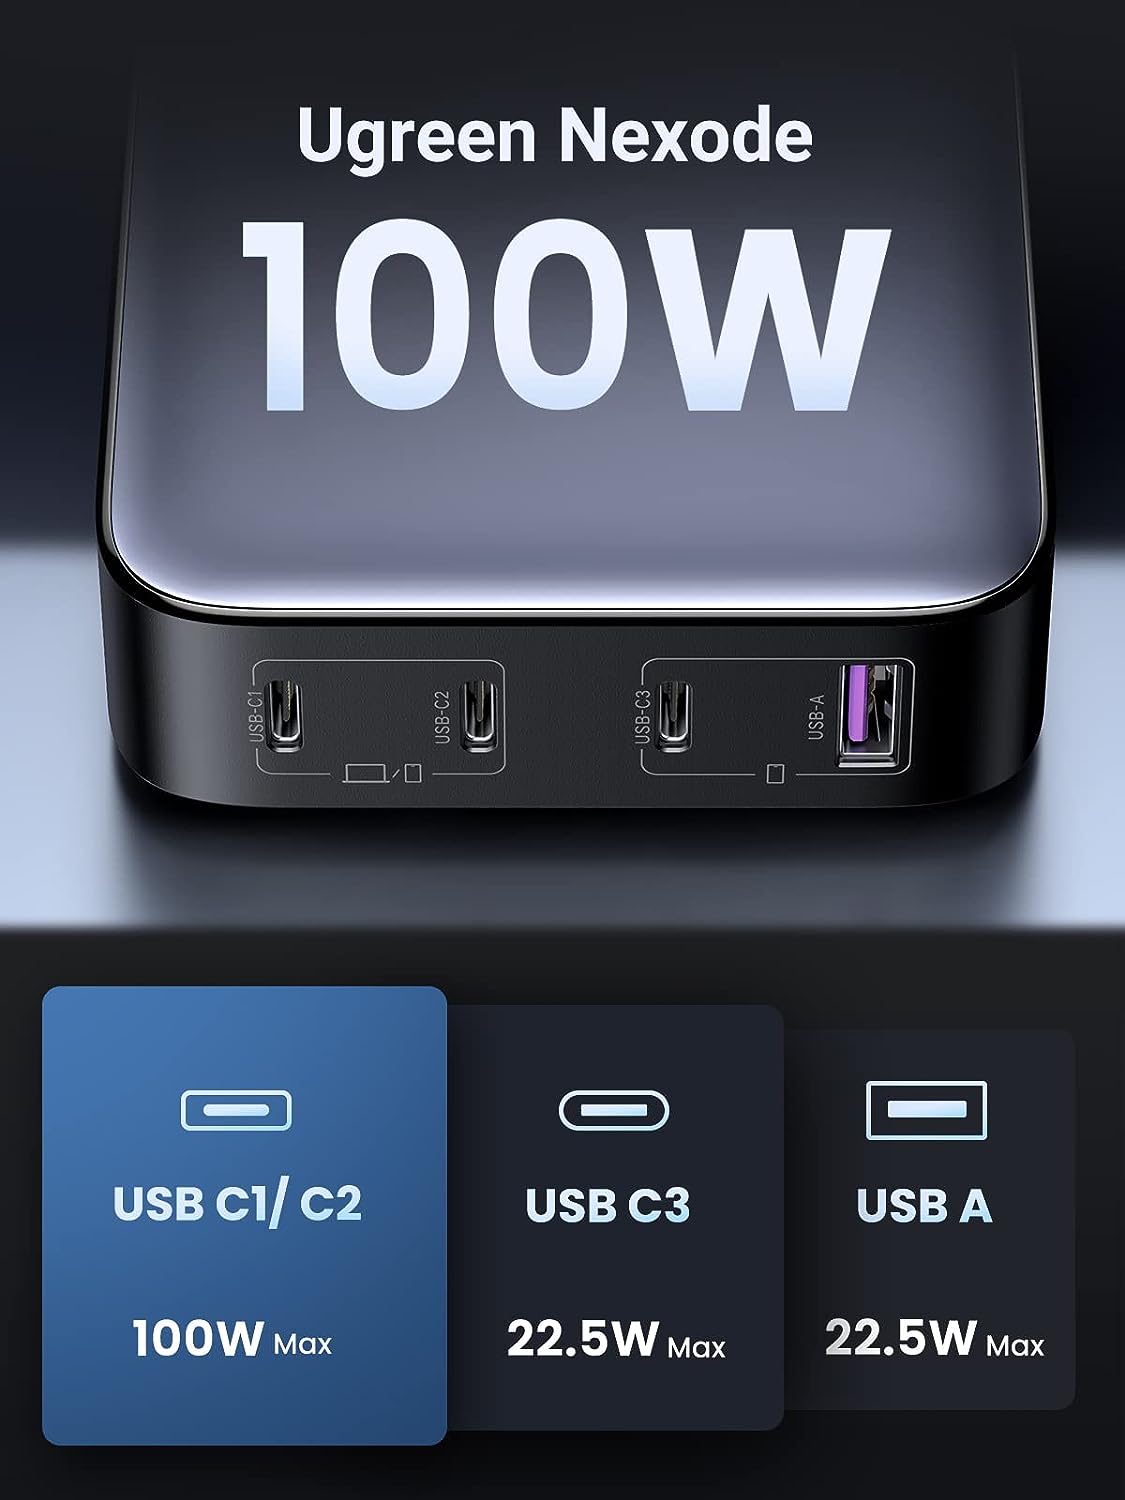 Ugreen Nexode 200W USB C GaN Charger-6 Ports Desktop Charger